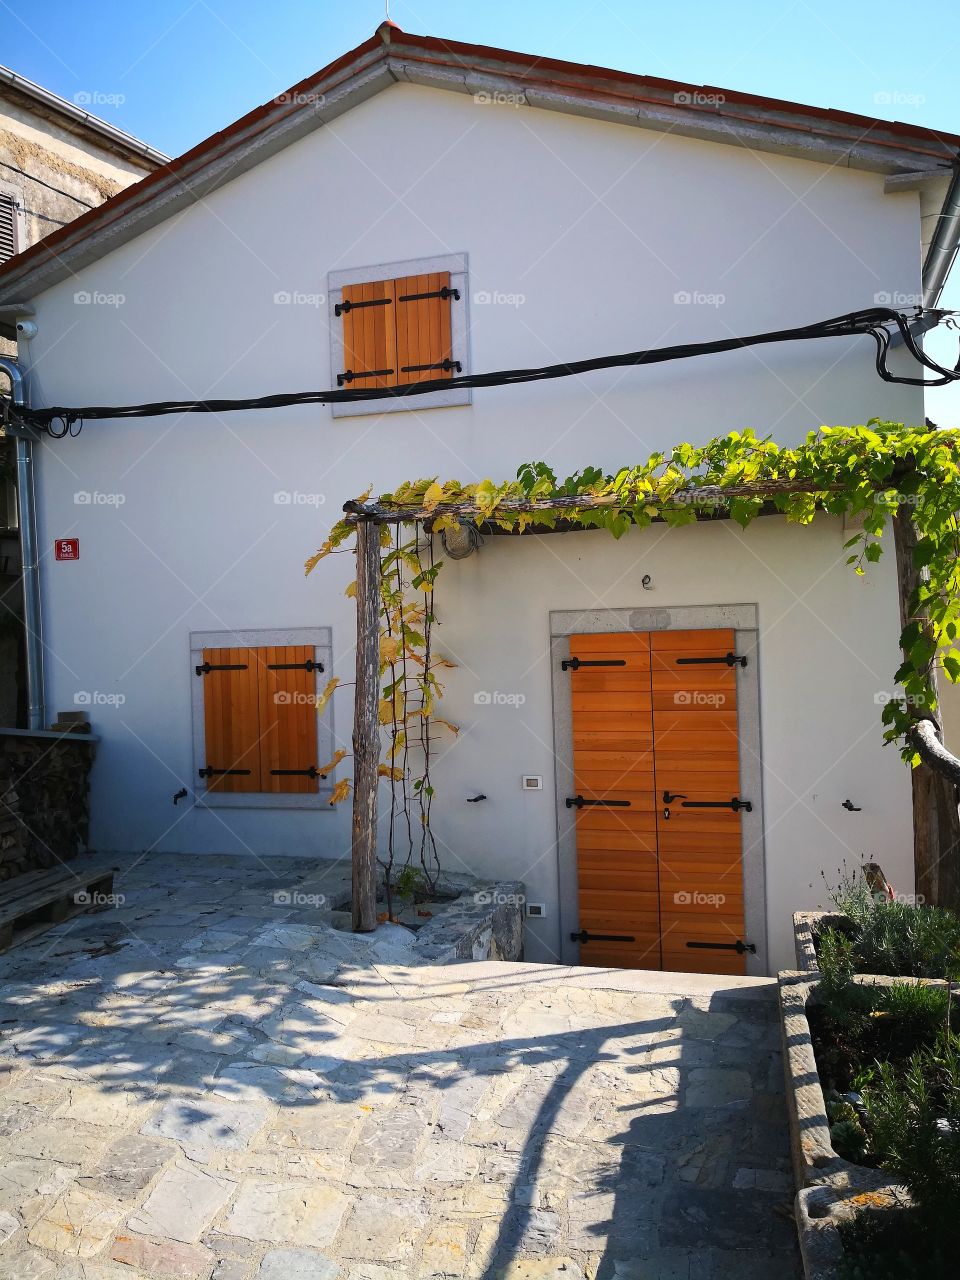 Wine yard house